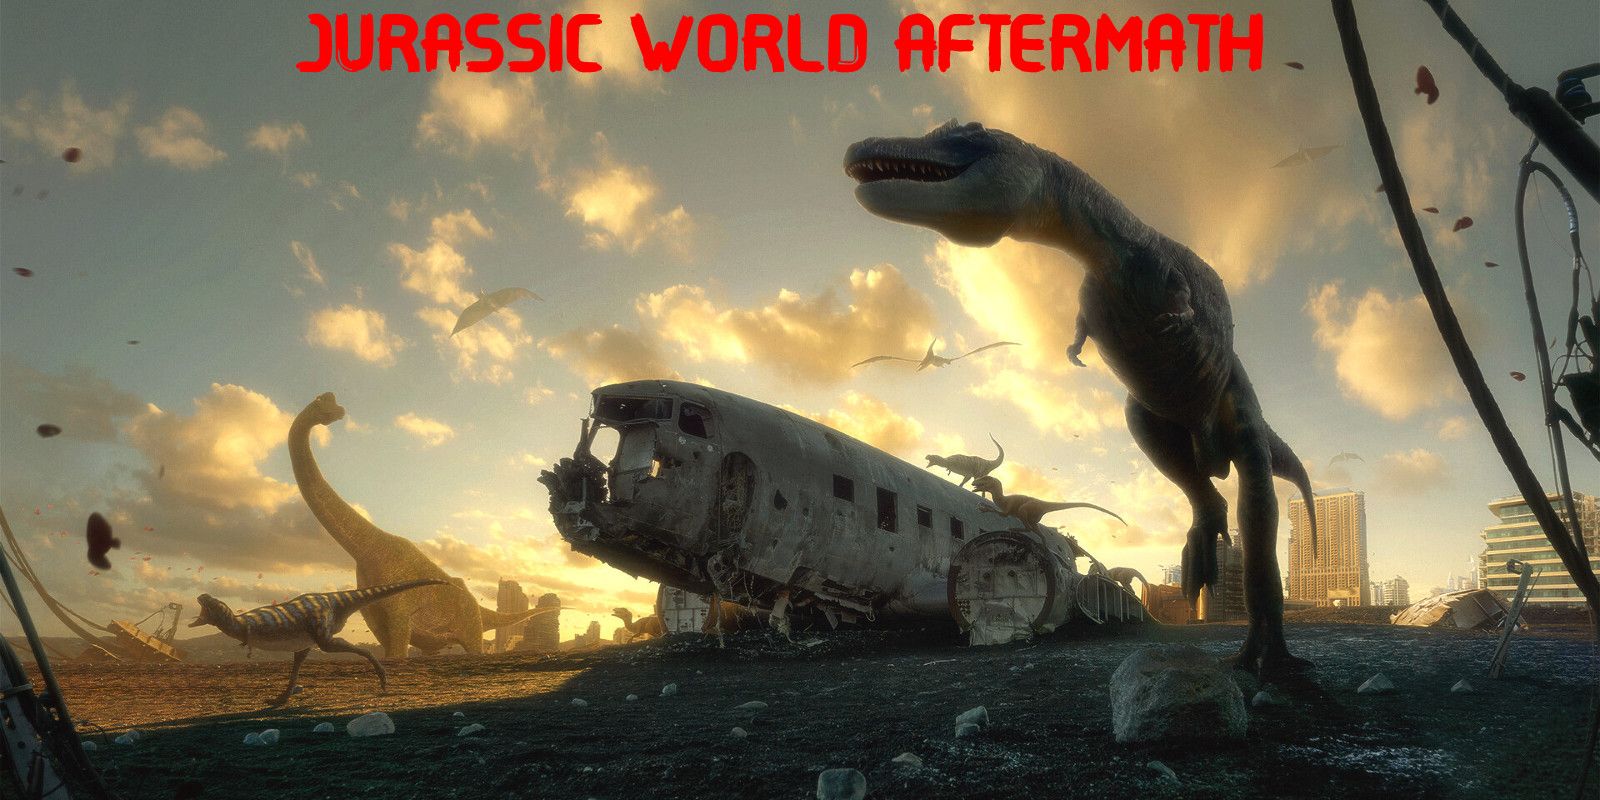 jurassic world aftermath psvr 2 download